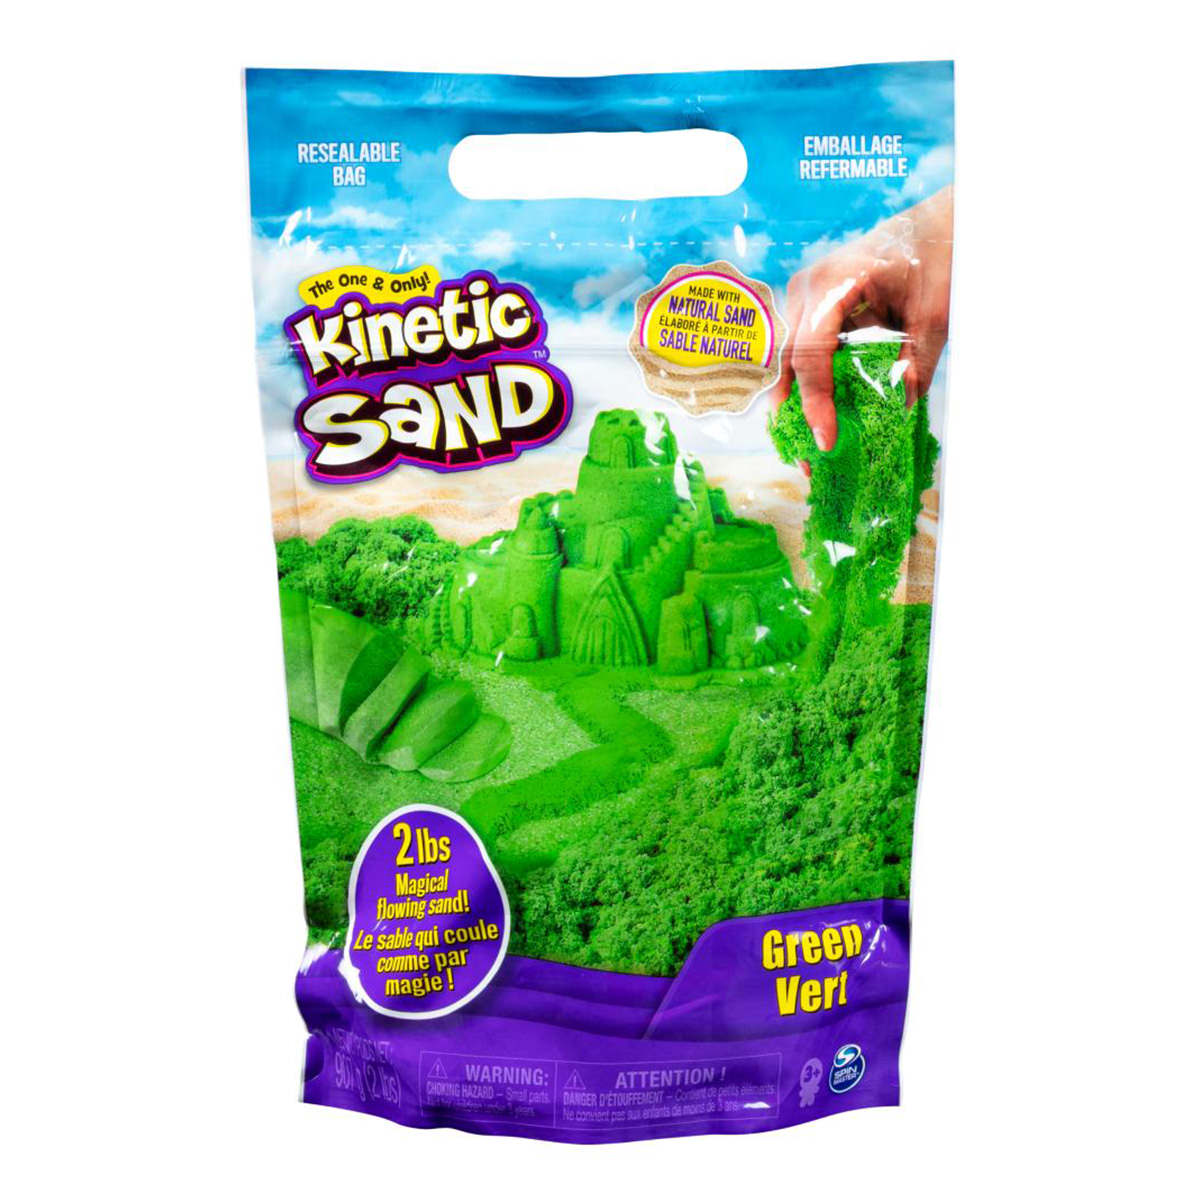 Kinetic Sand – SenseAbilities